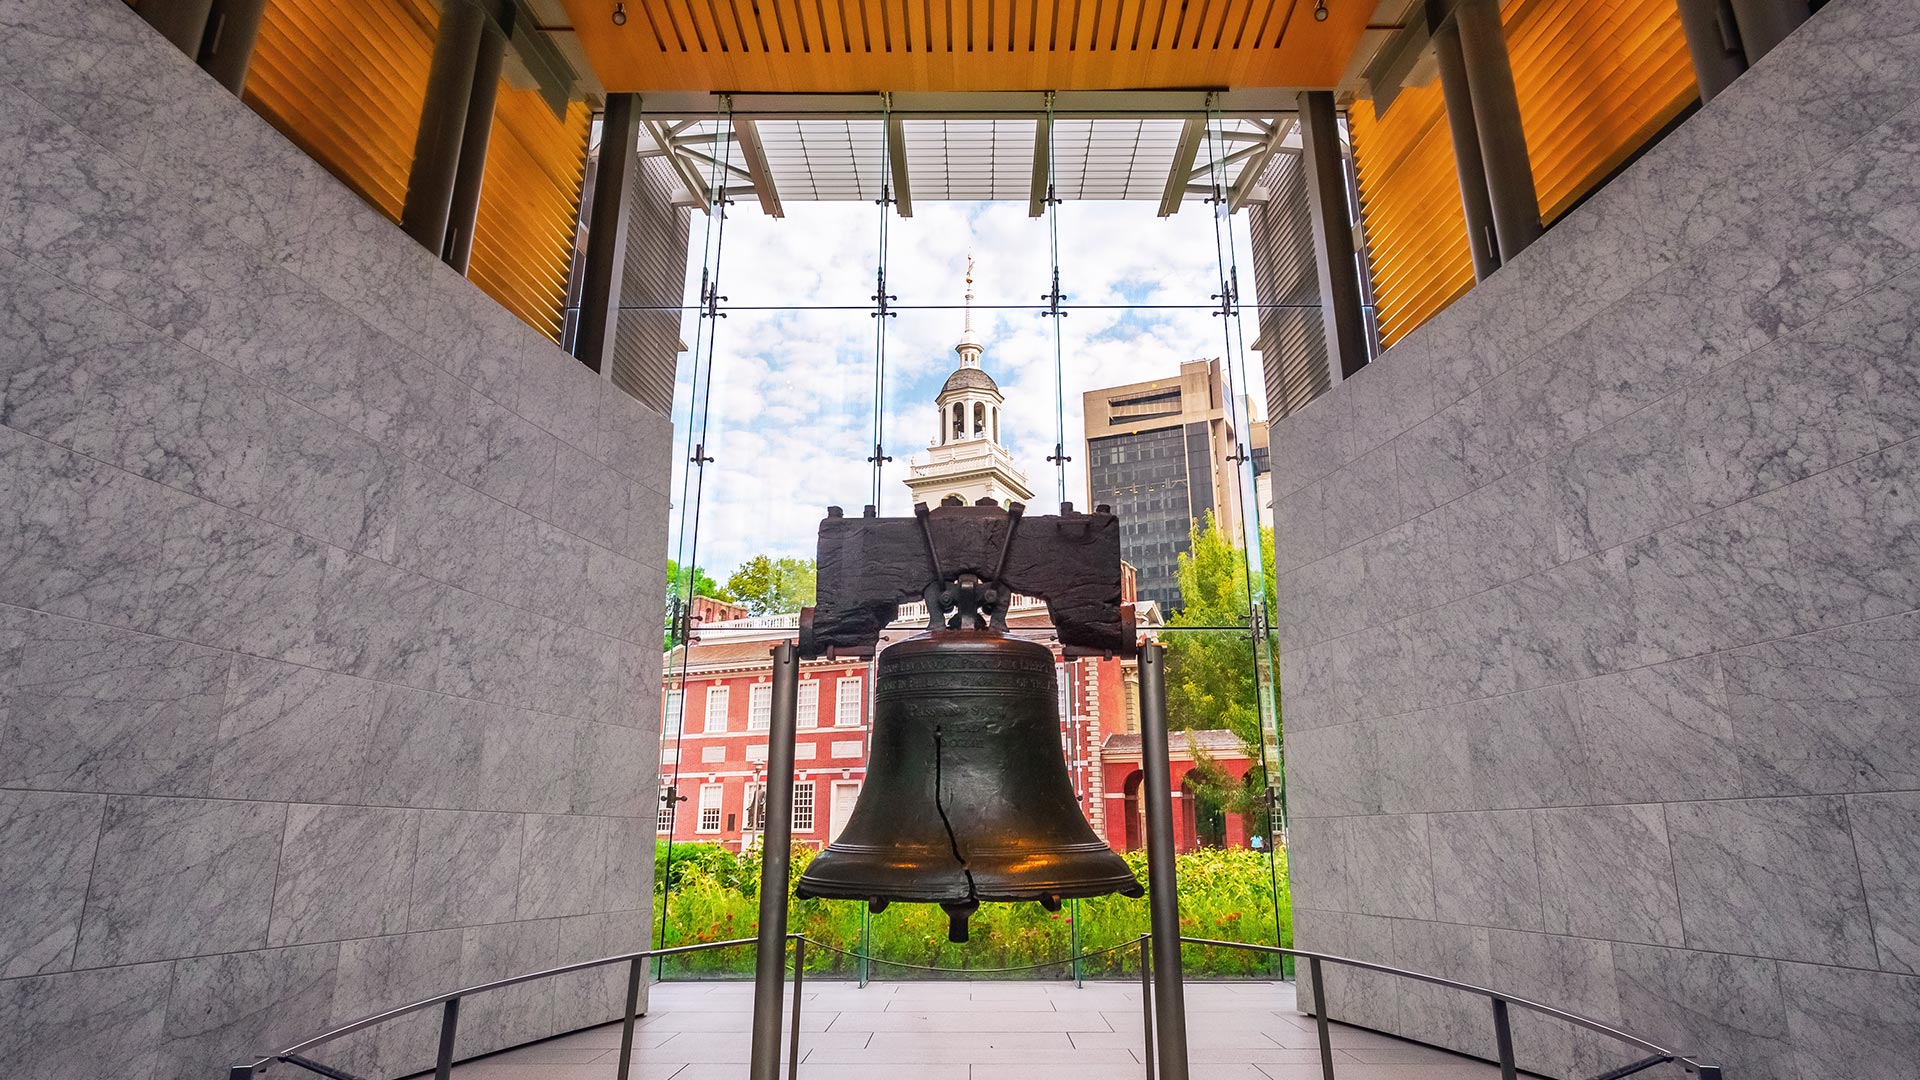 Liberty bell in Philadelphia